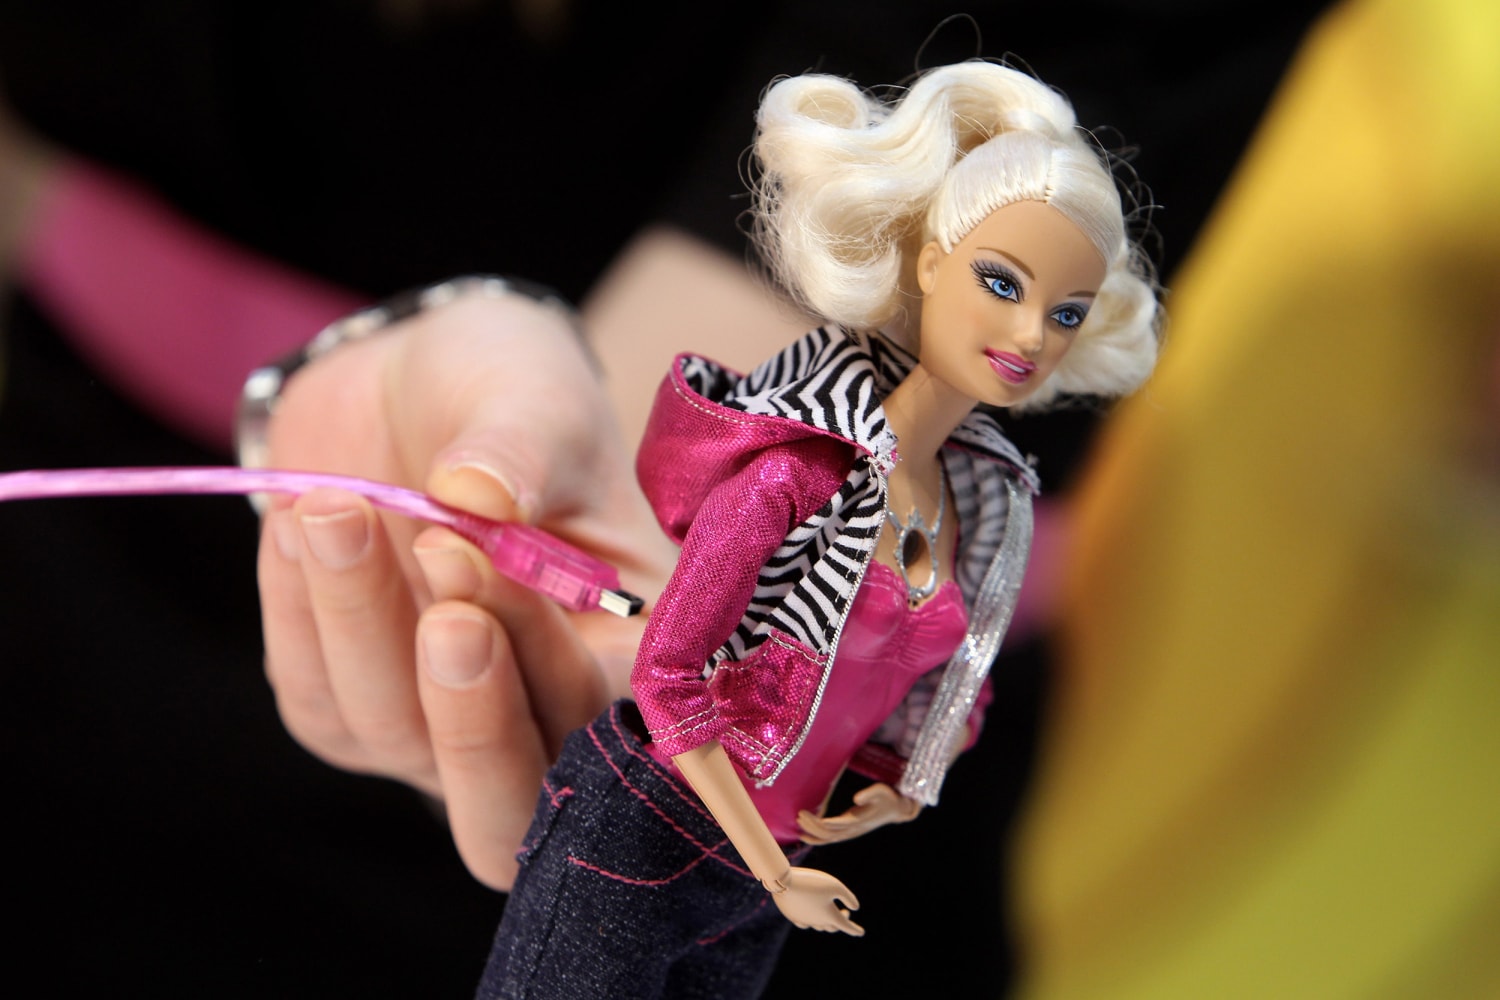 Barbie Toy Story 3 Barbie & Ken Made For Each Other RARE Dolls Set Mattel  2009